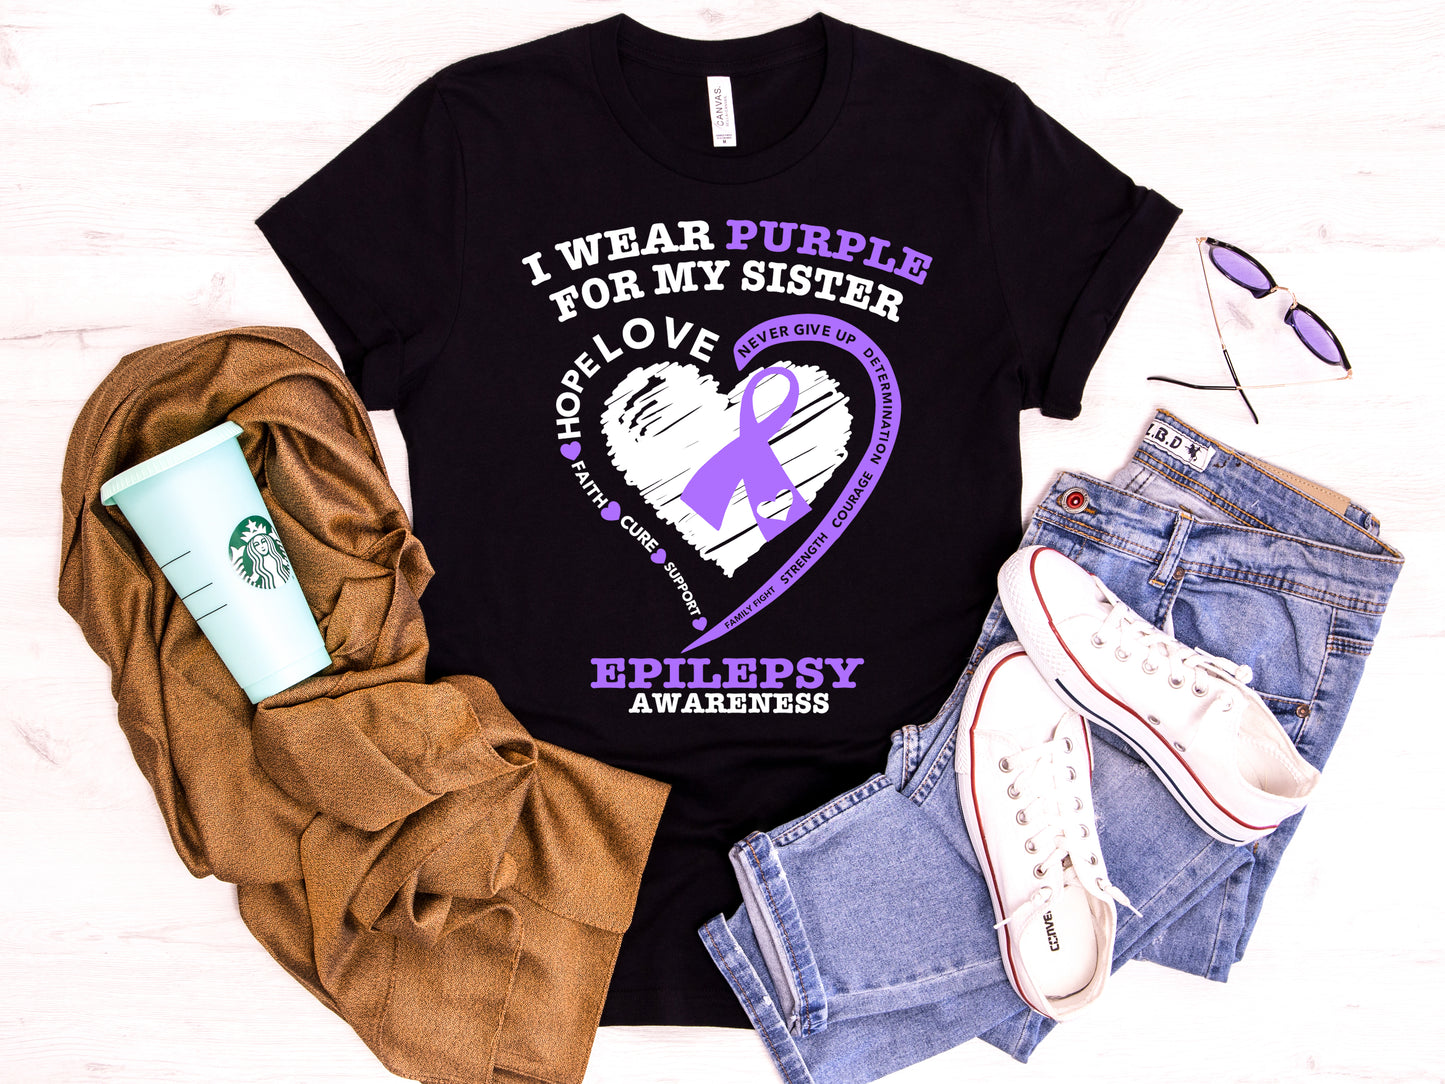 Epilepsy Awareness Shirts